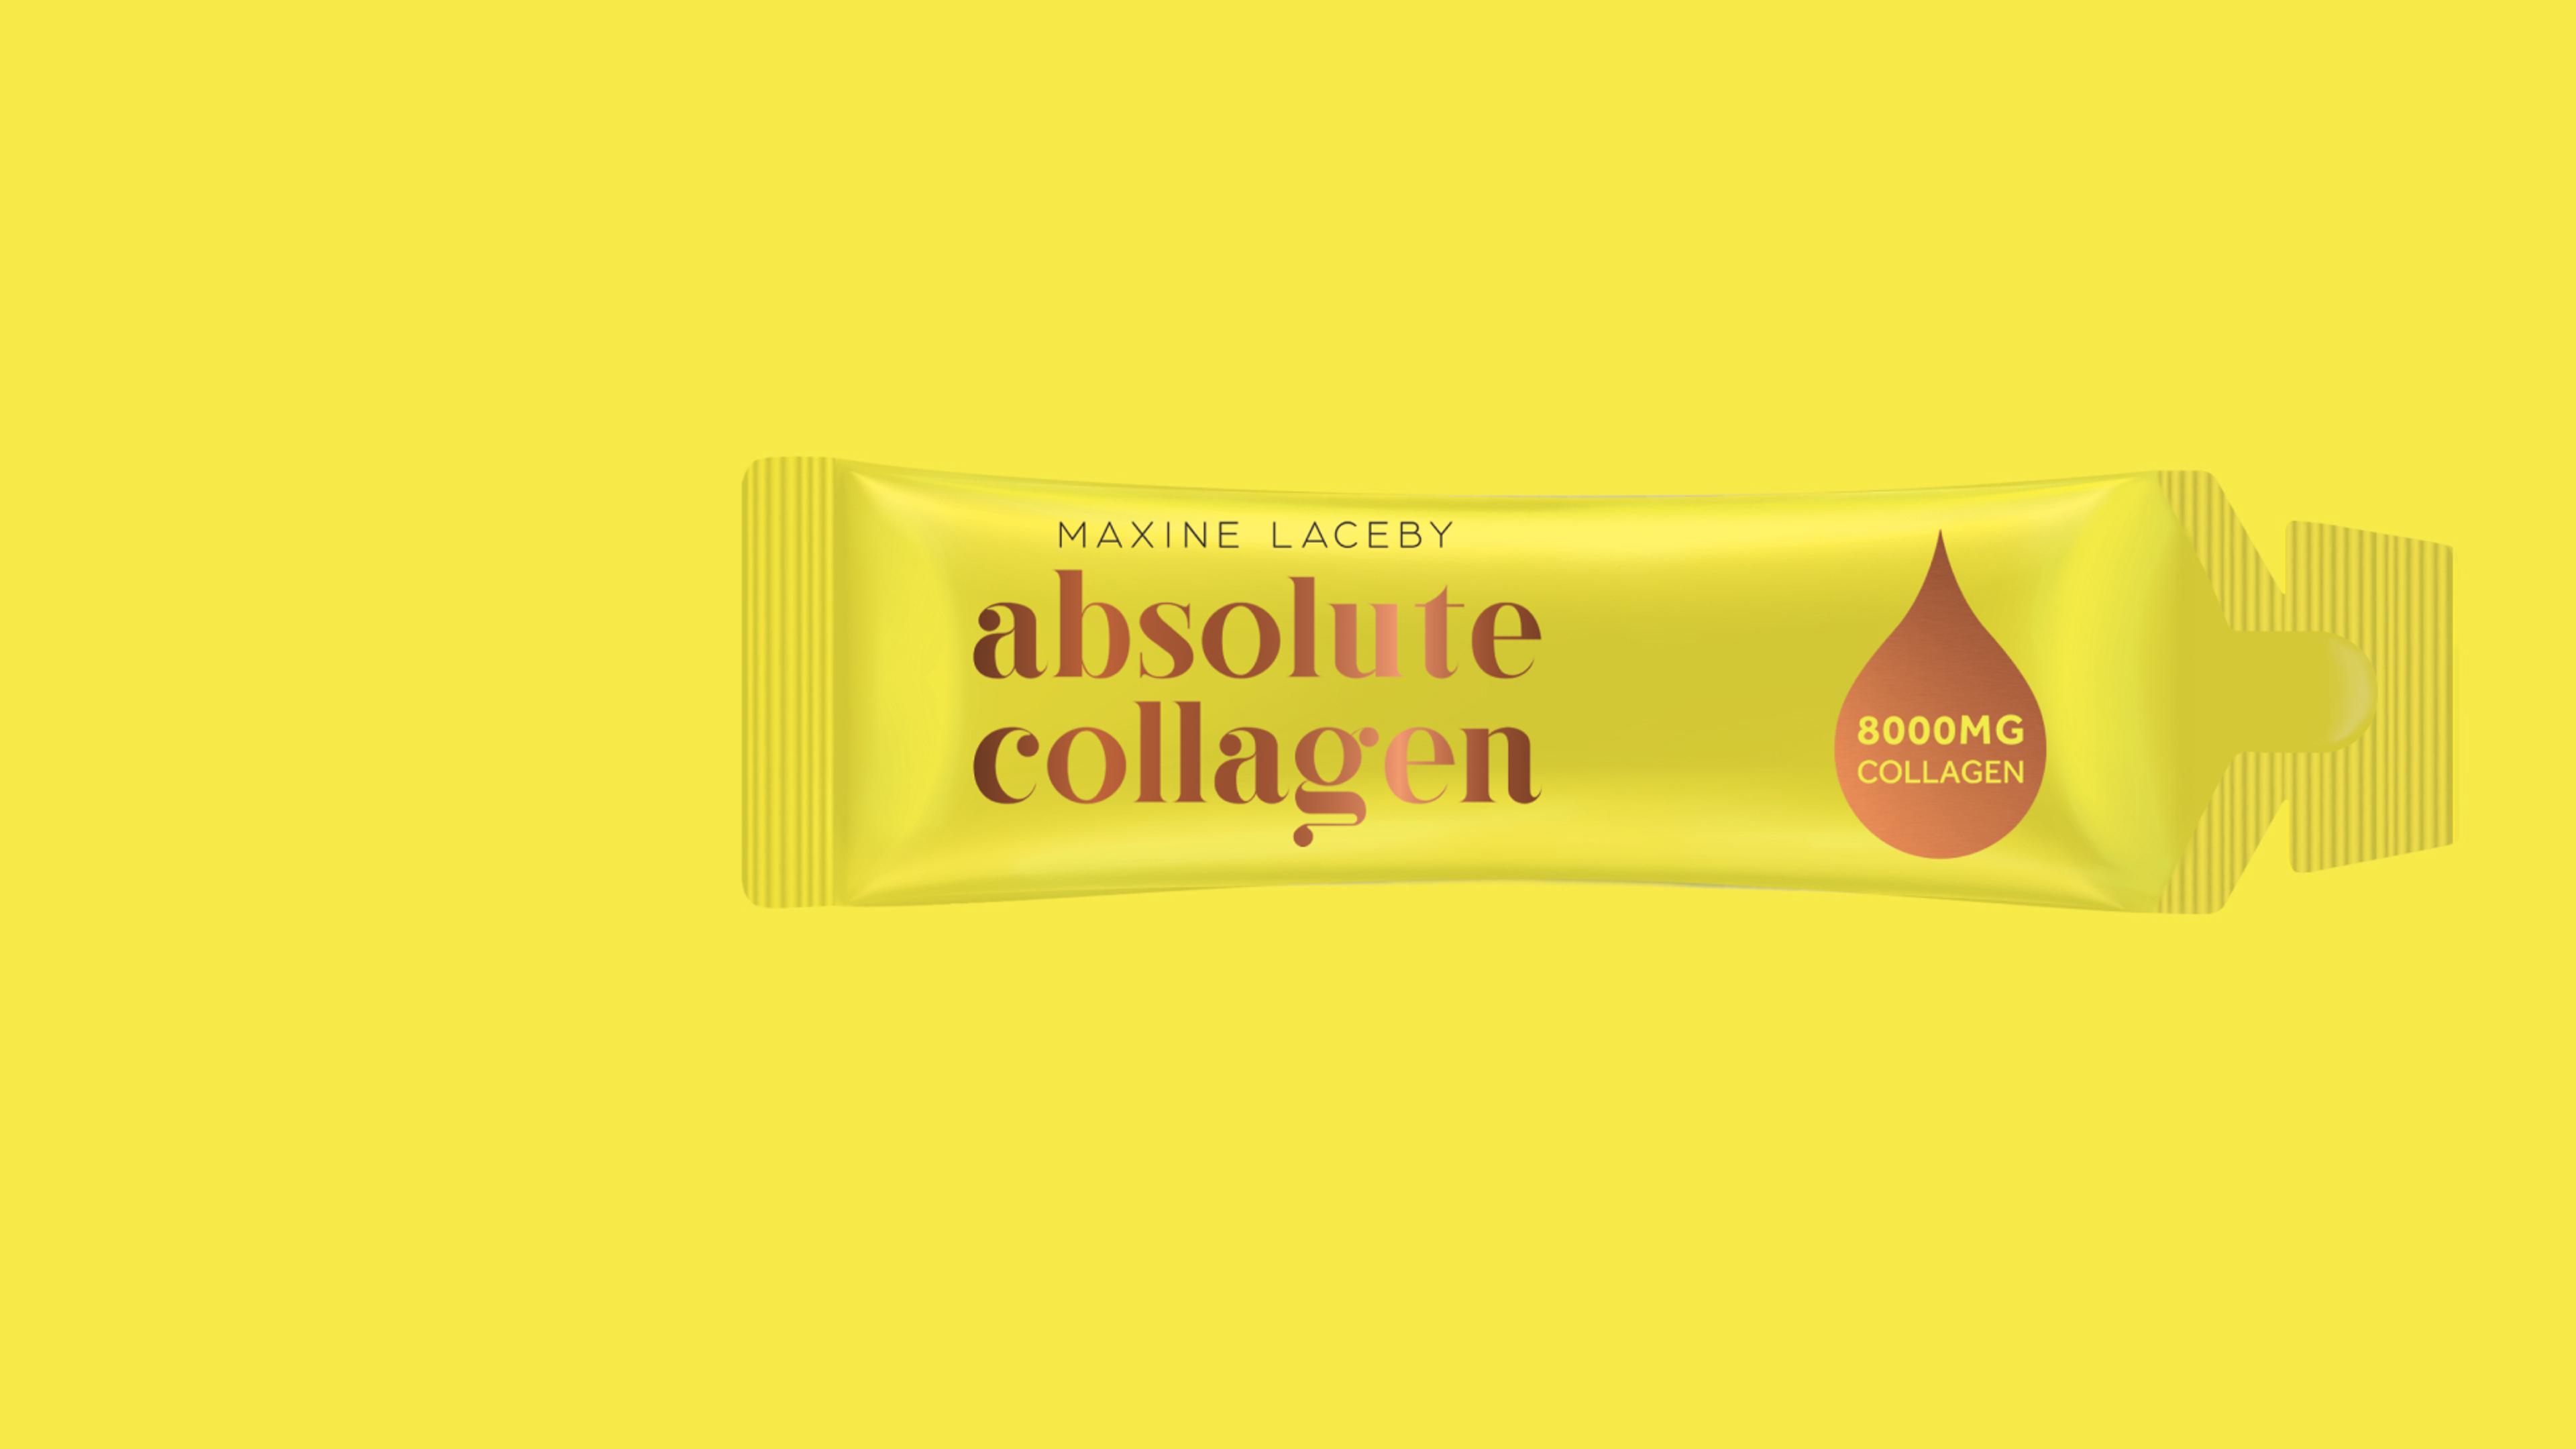 Absolute Collagen appoints Hanabi